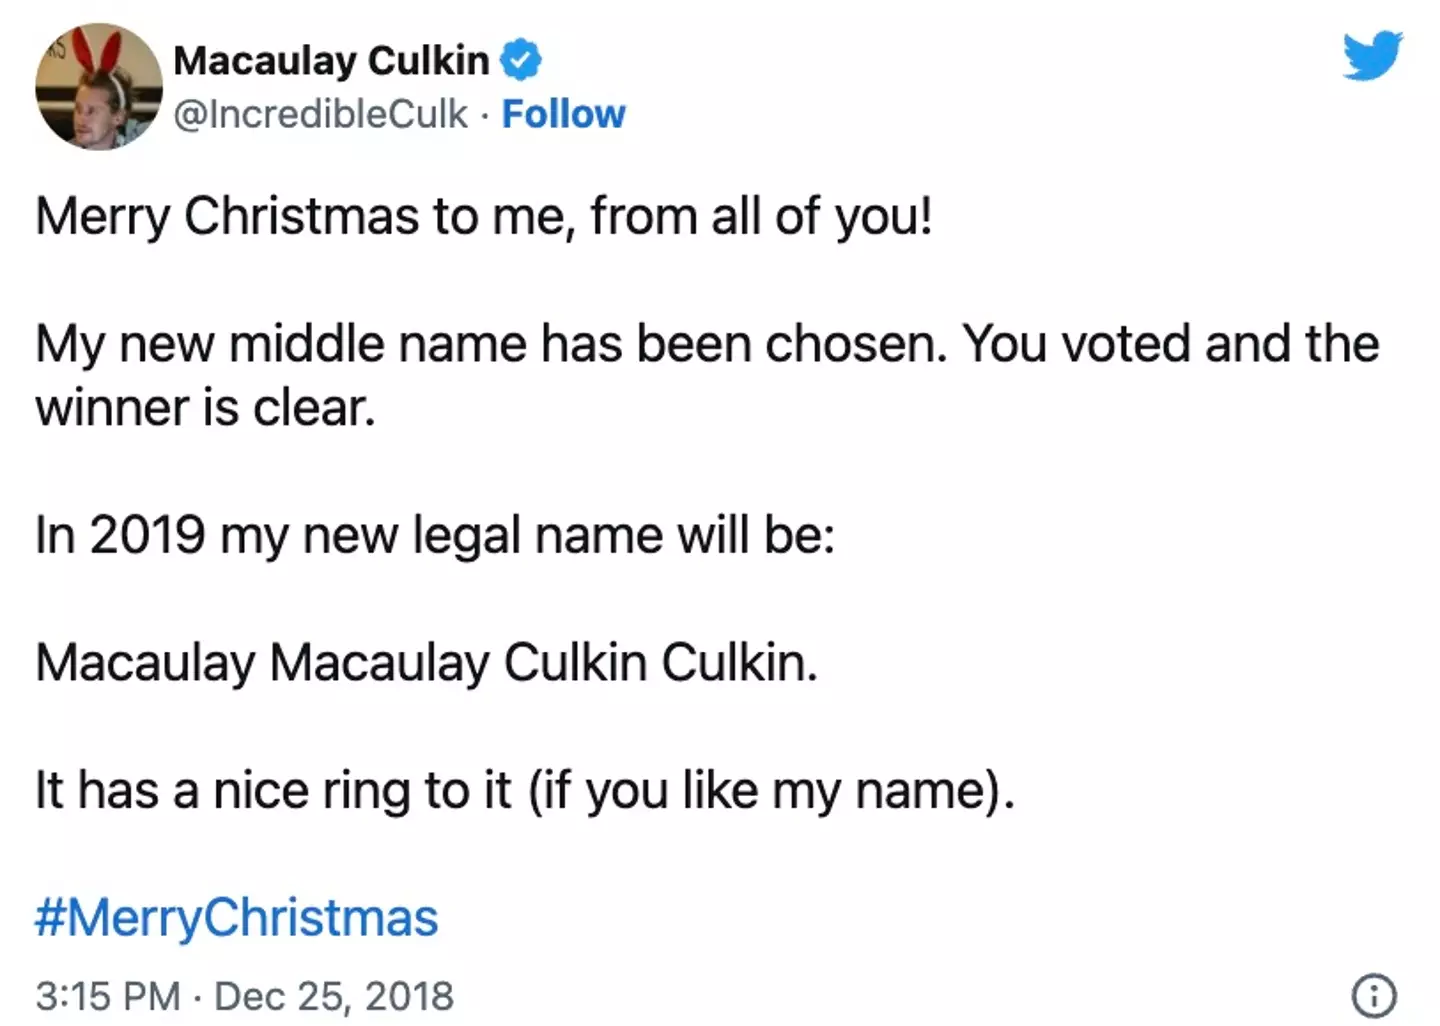 Macaulay Culkin stood by his word.